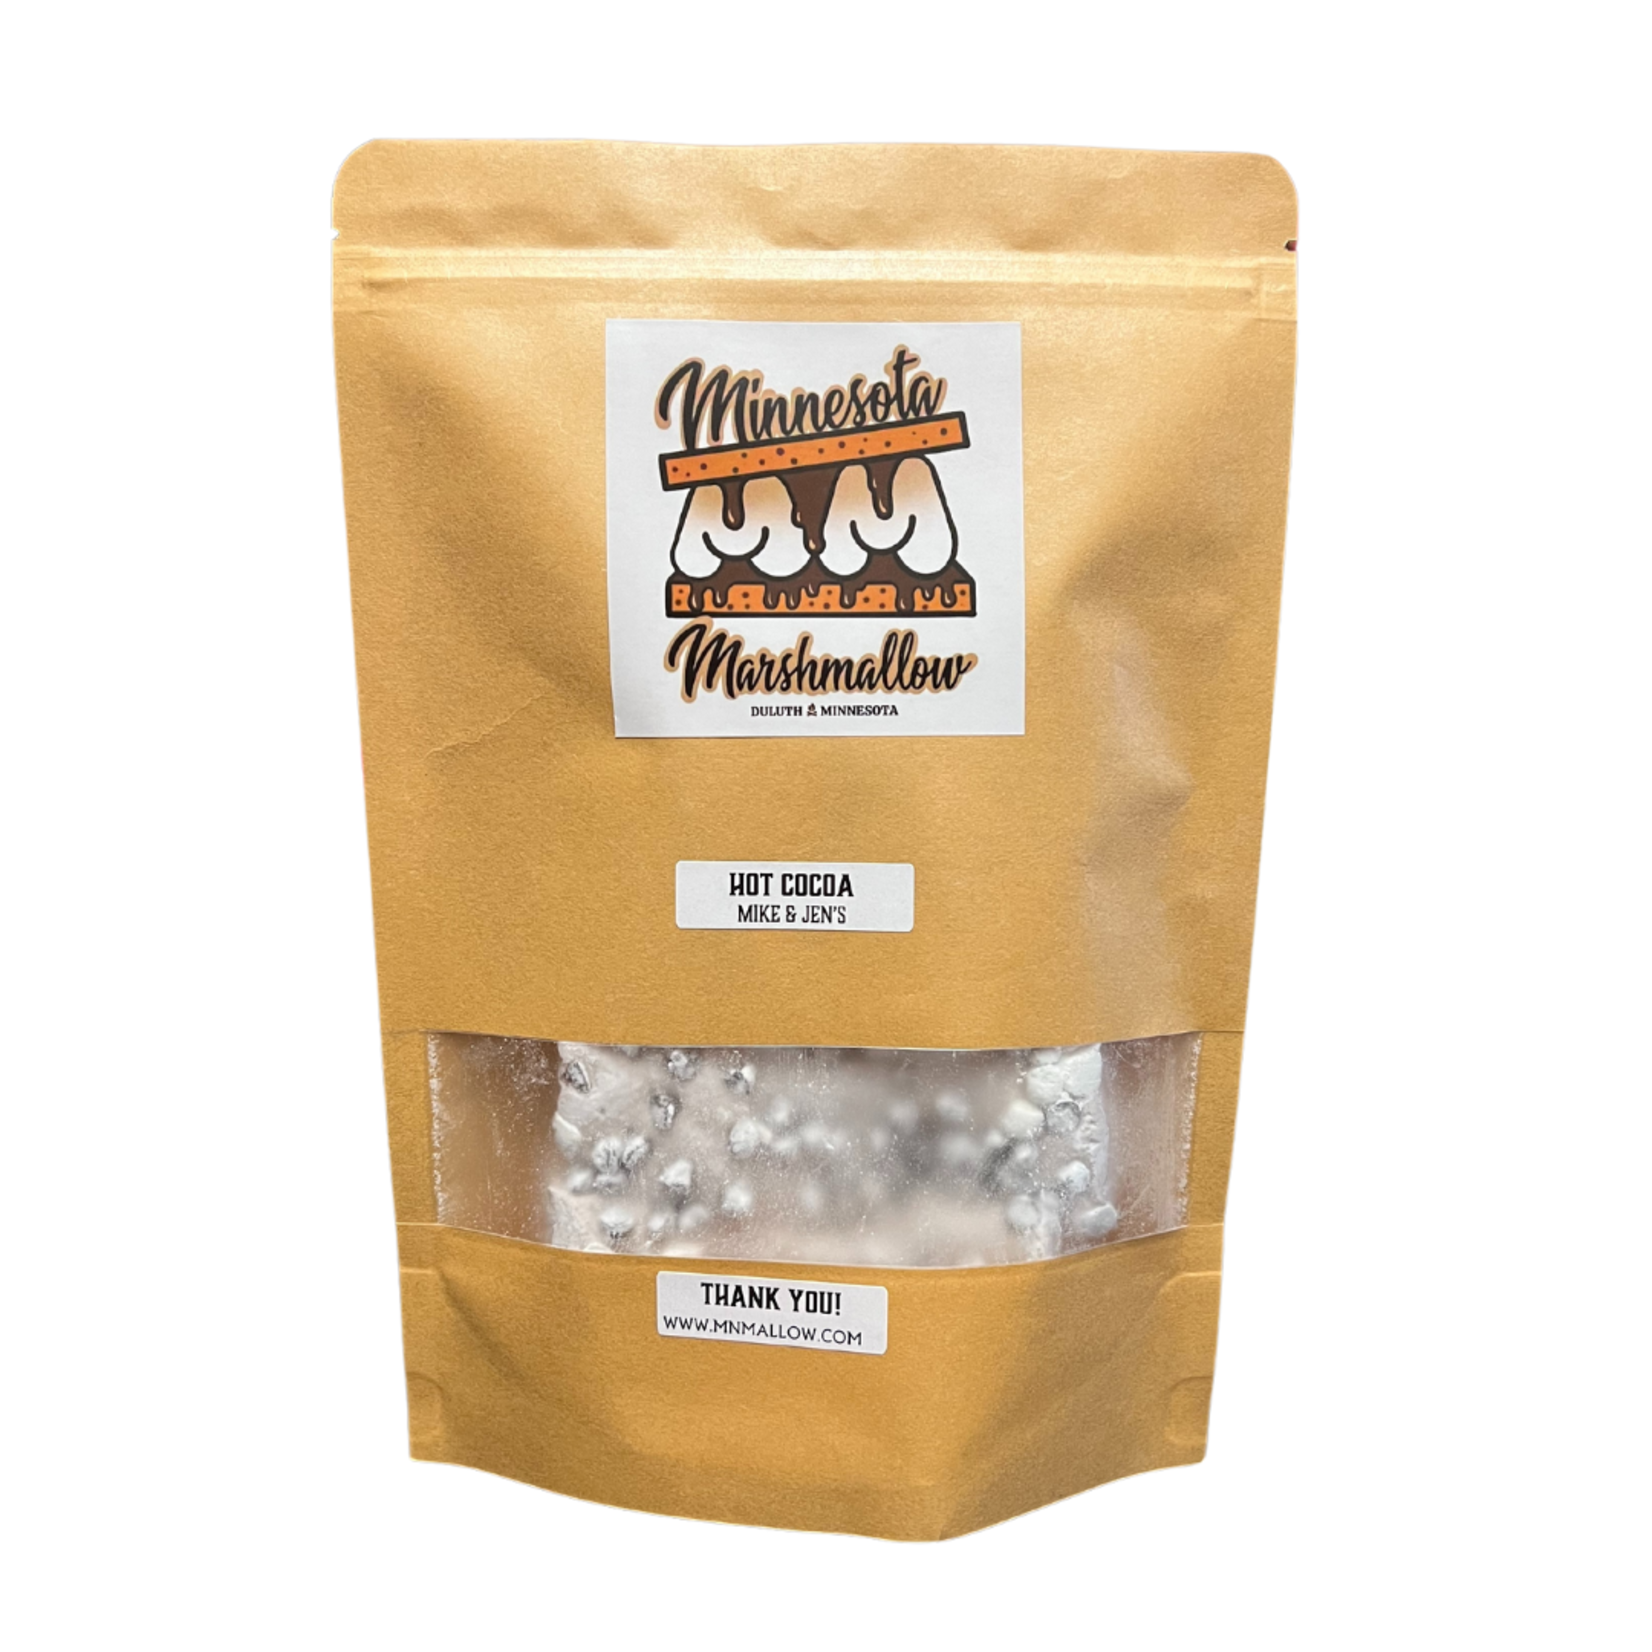 Minnesota Marshmallow Mike & Jen's Hot Cocoa Mallows